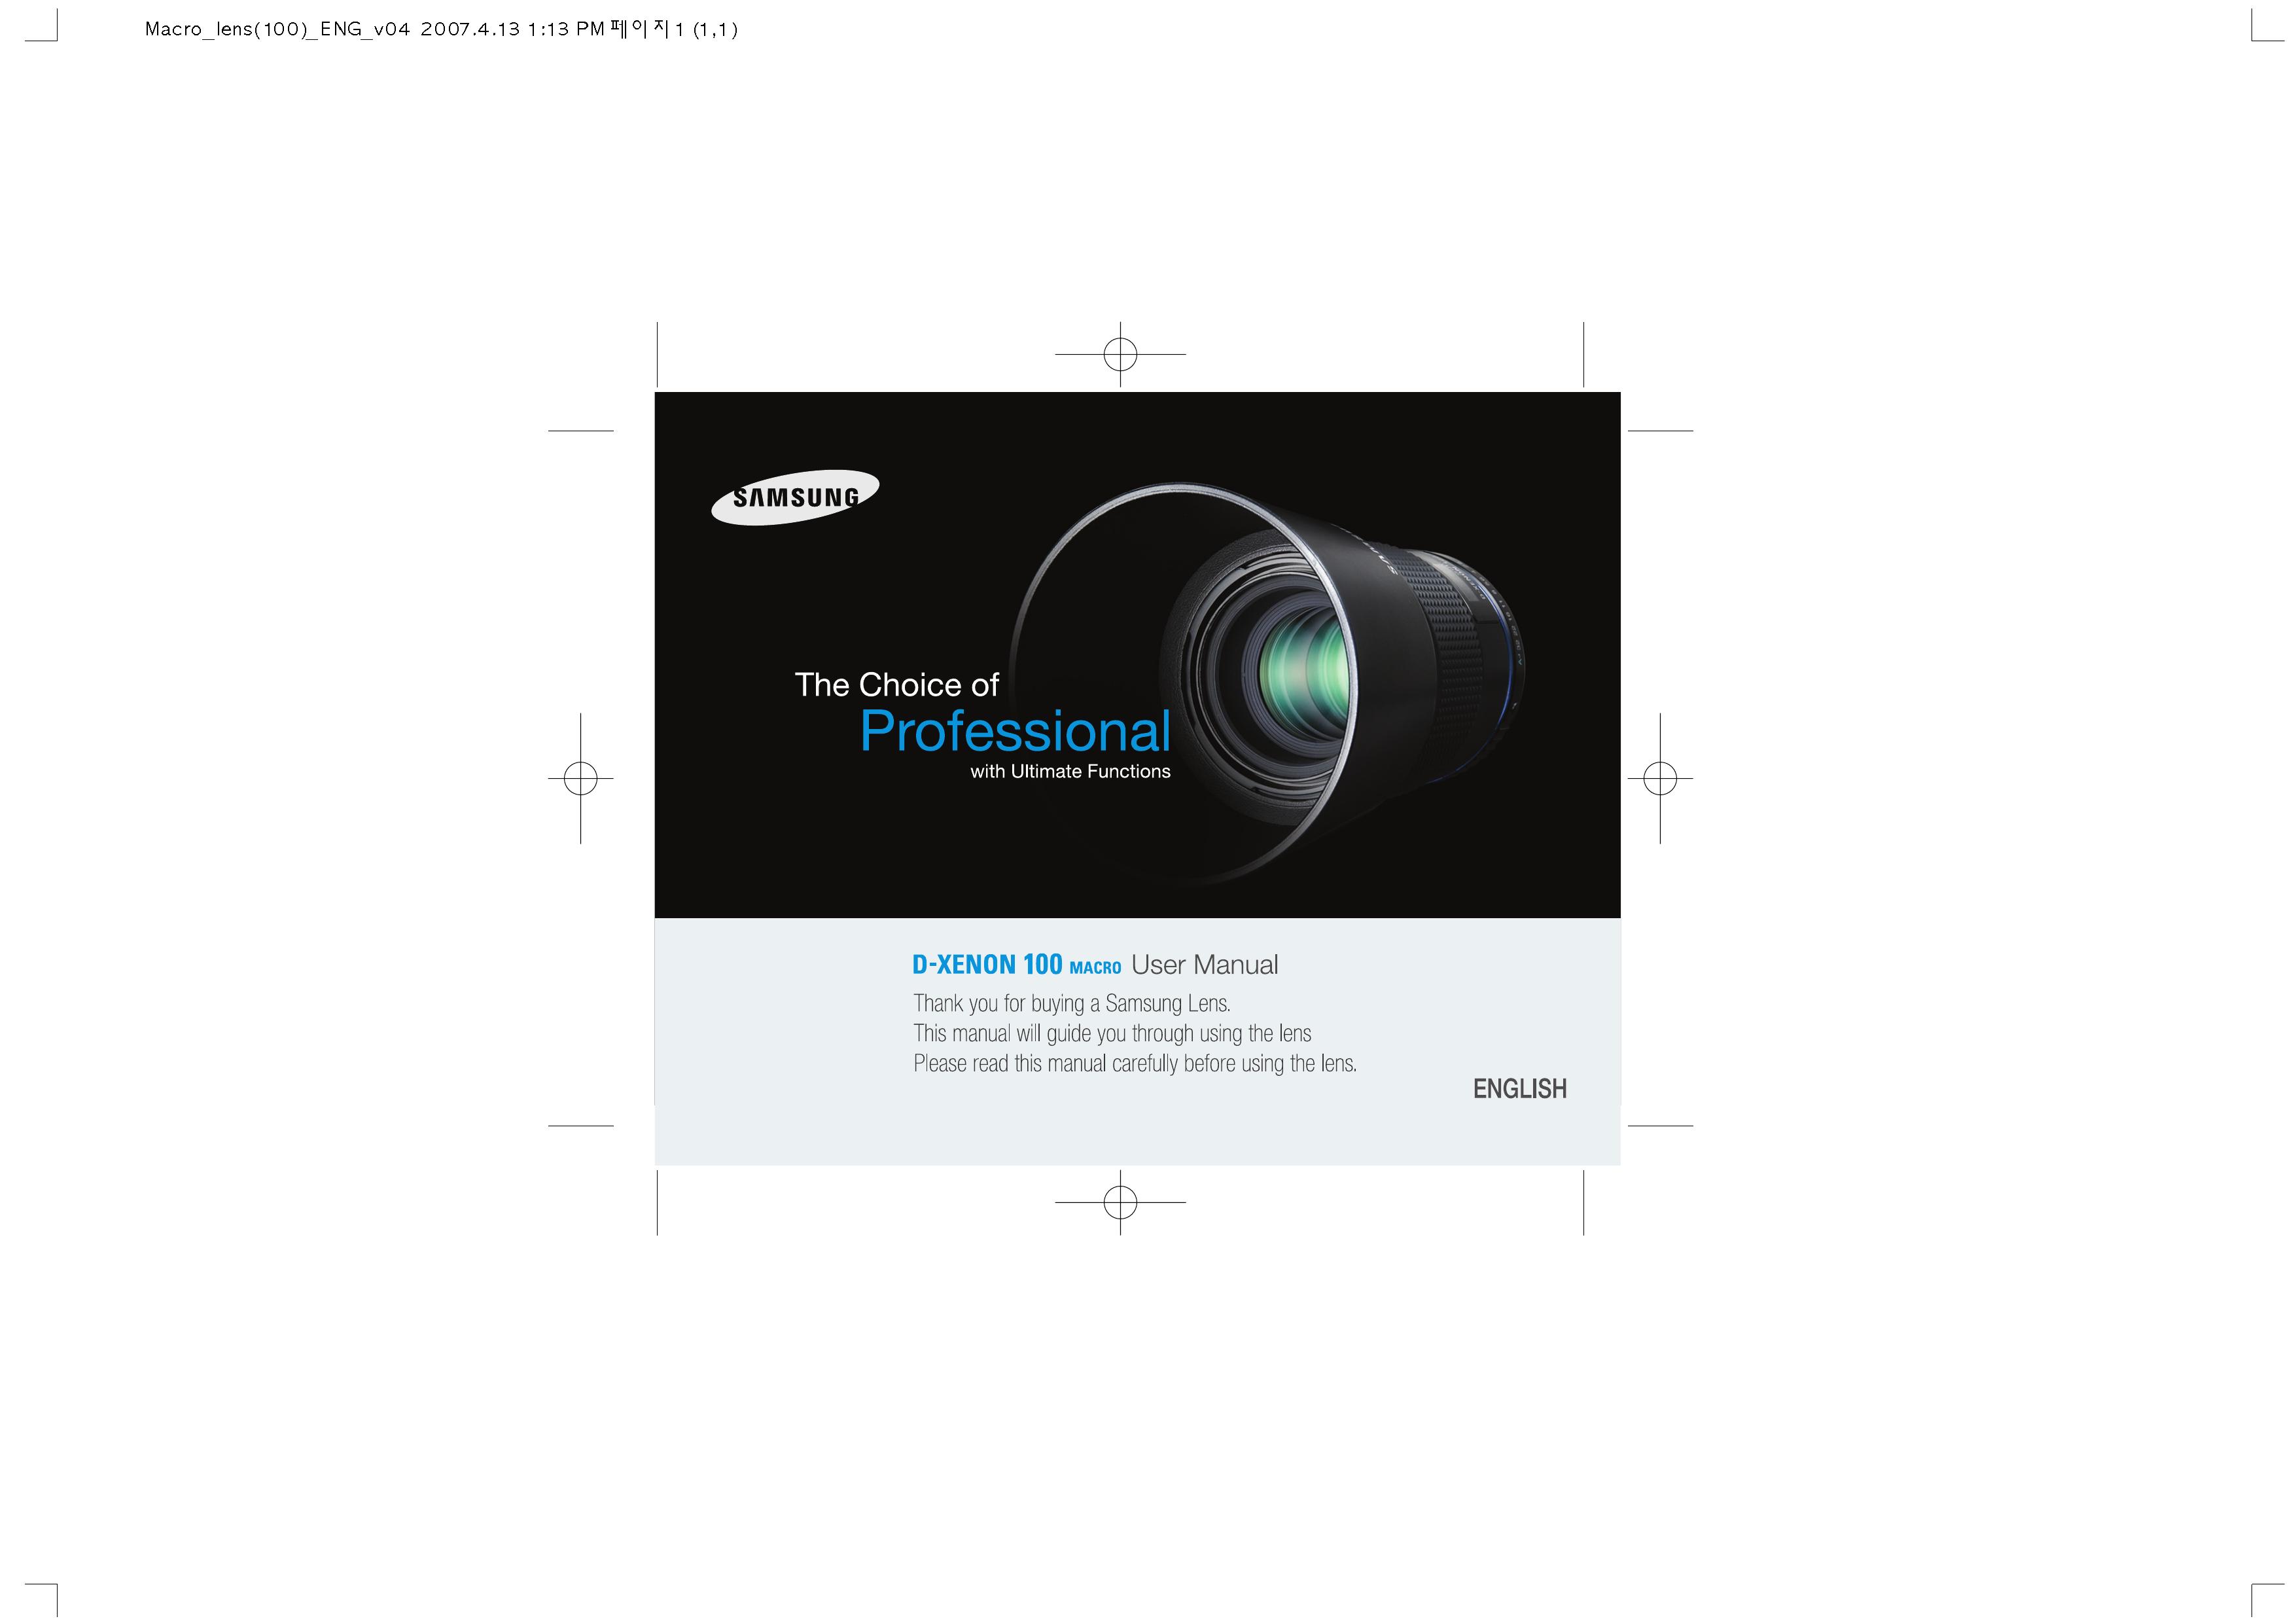 Samsung D-XENON 100 Macro Camera Lens User Manual